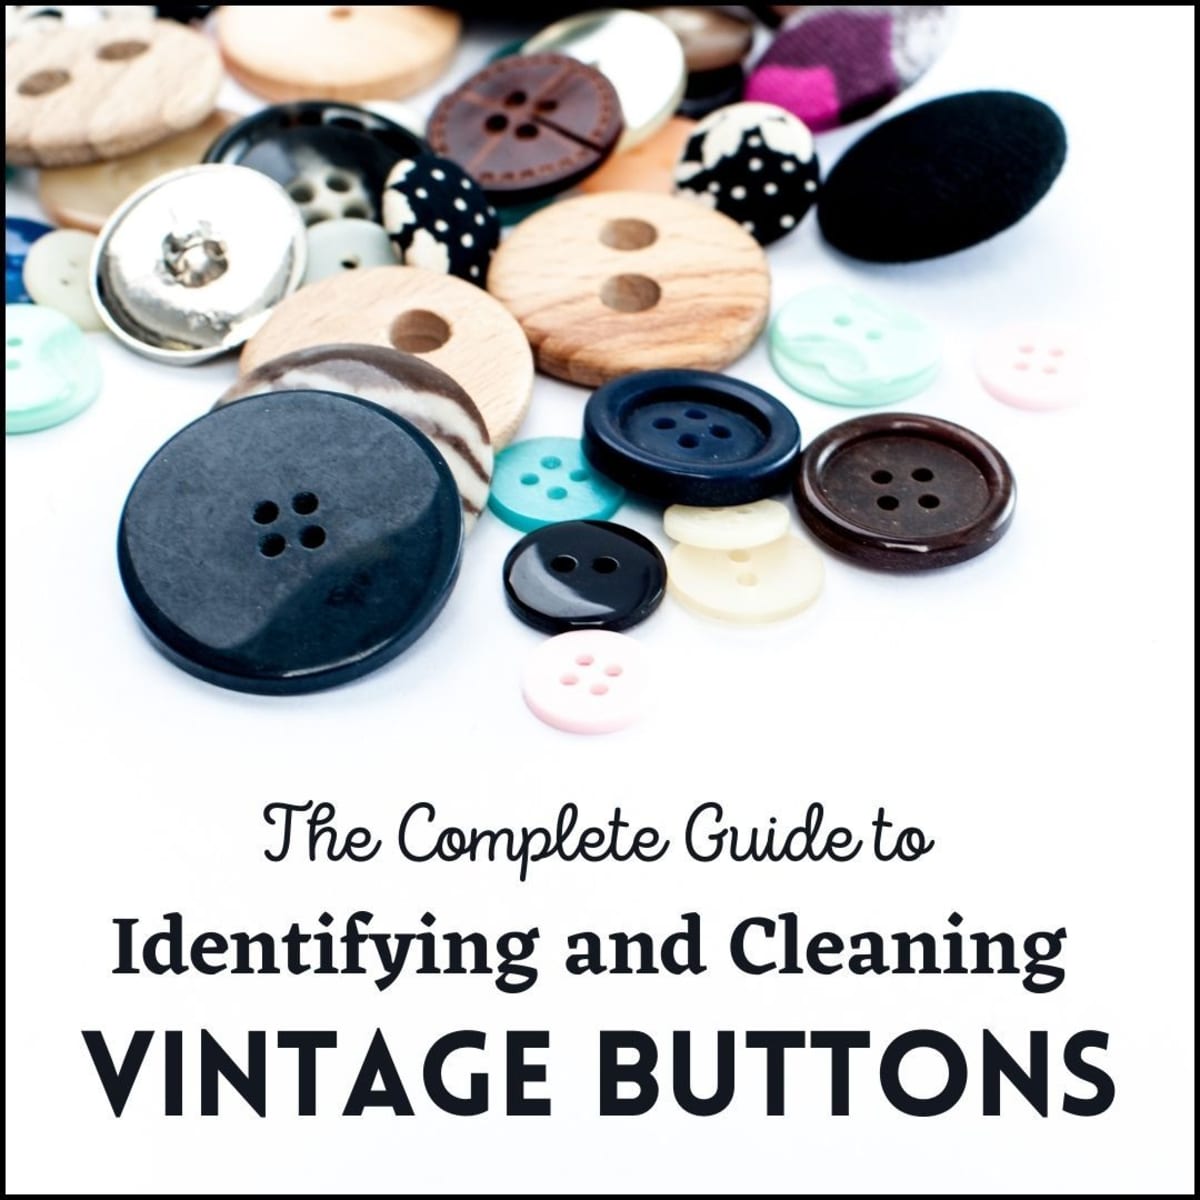 Celluloid Buttons #2  Vintage Celluloid  1930s Buttons  1940s Buttons  Antique Buttons  Celluloid Buttons  Red Black Celluloid